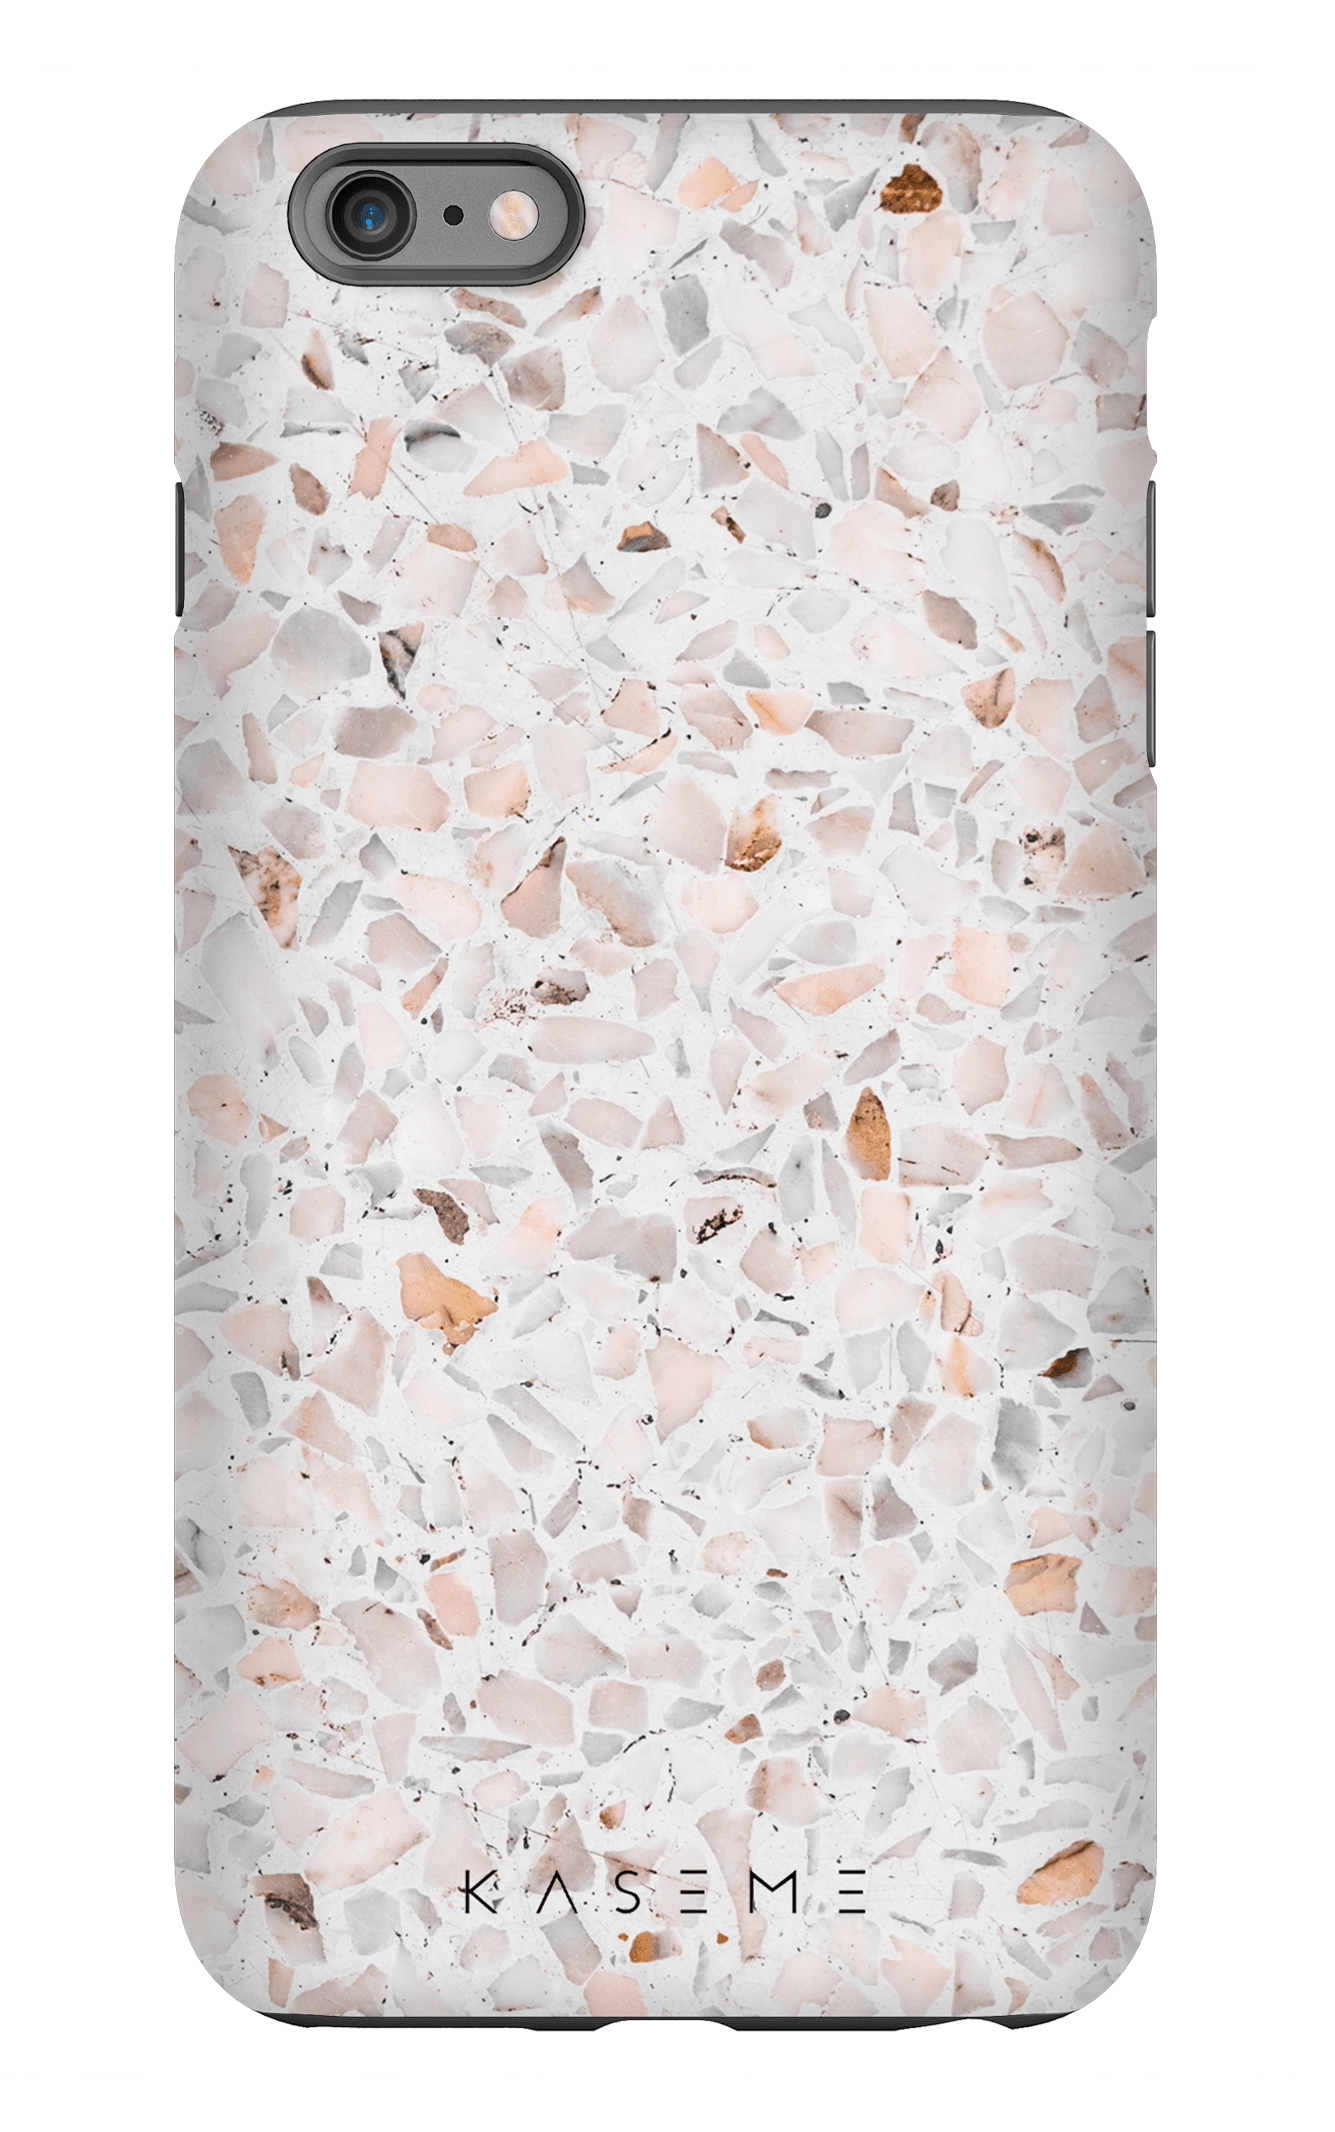 Frozen stone - iPhone 6/6s Plus